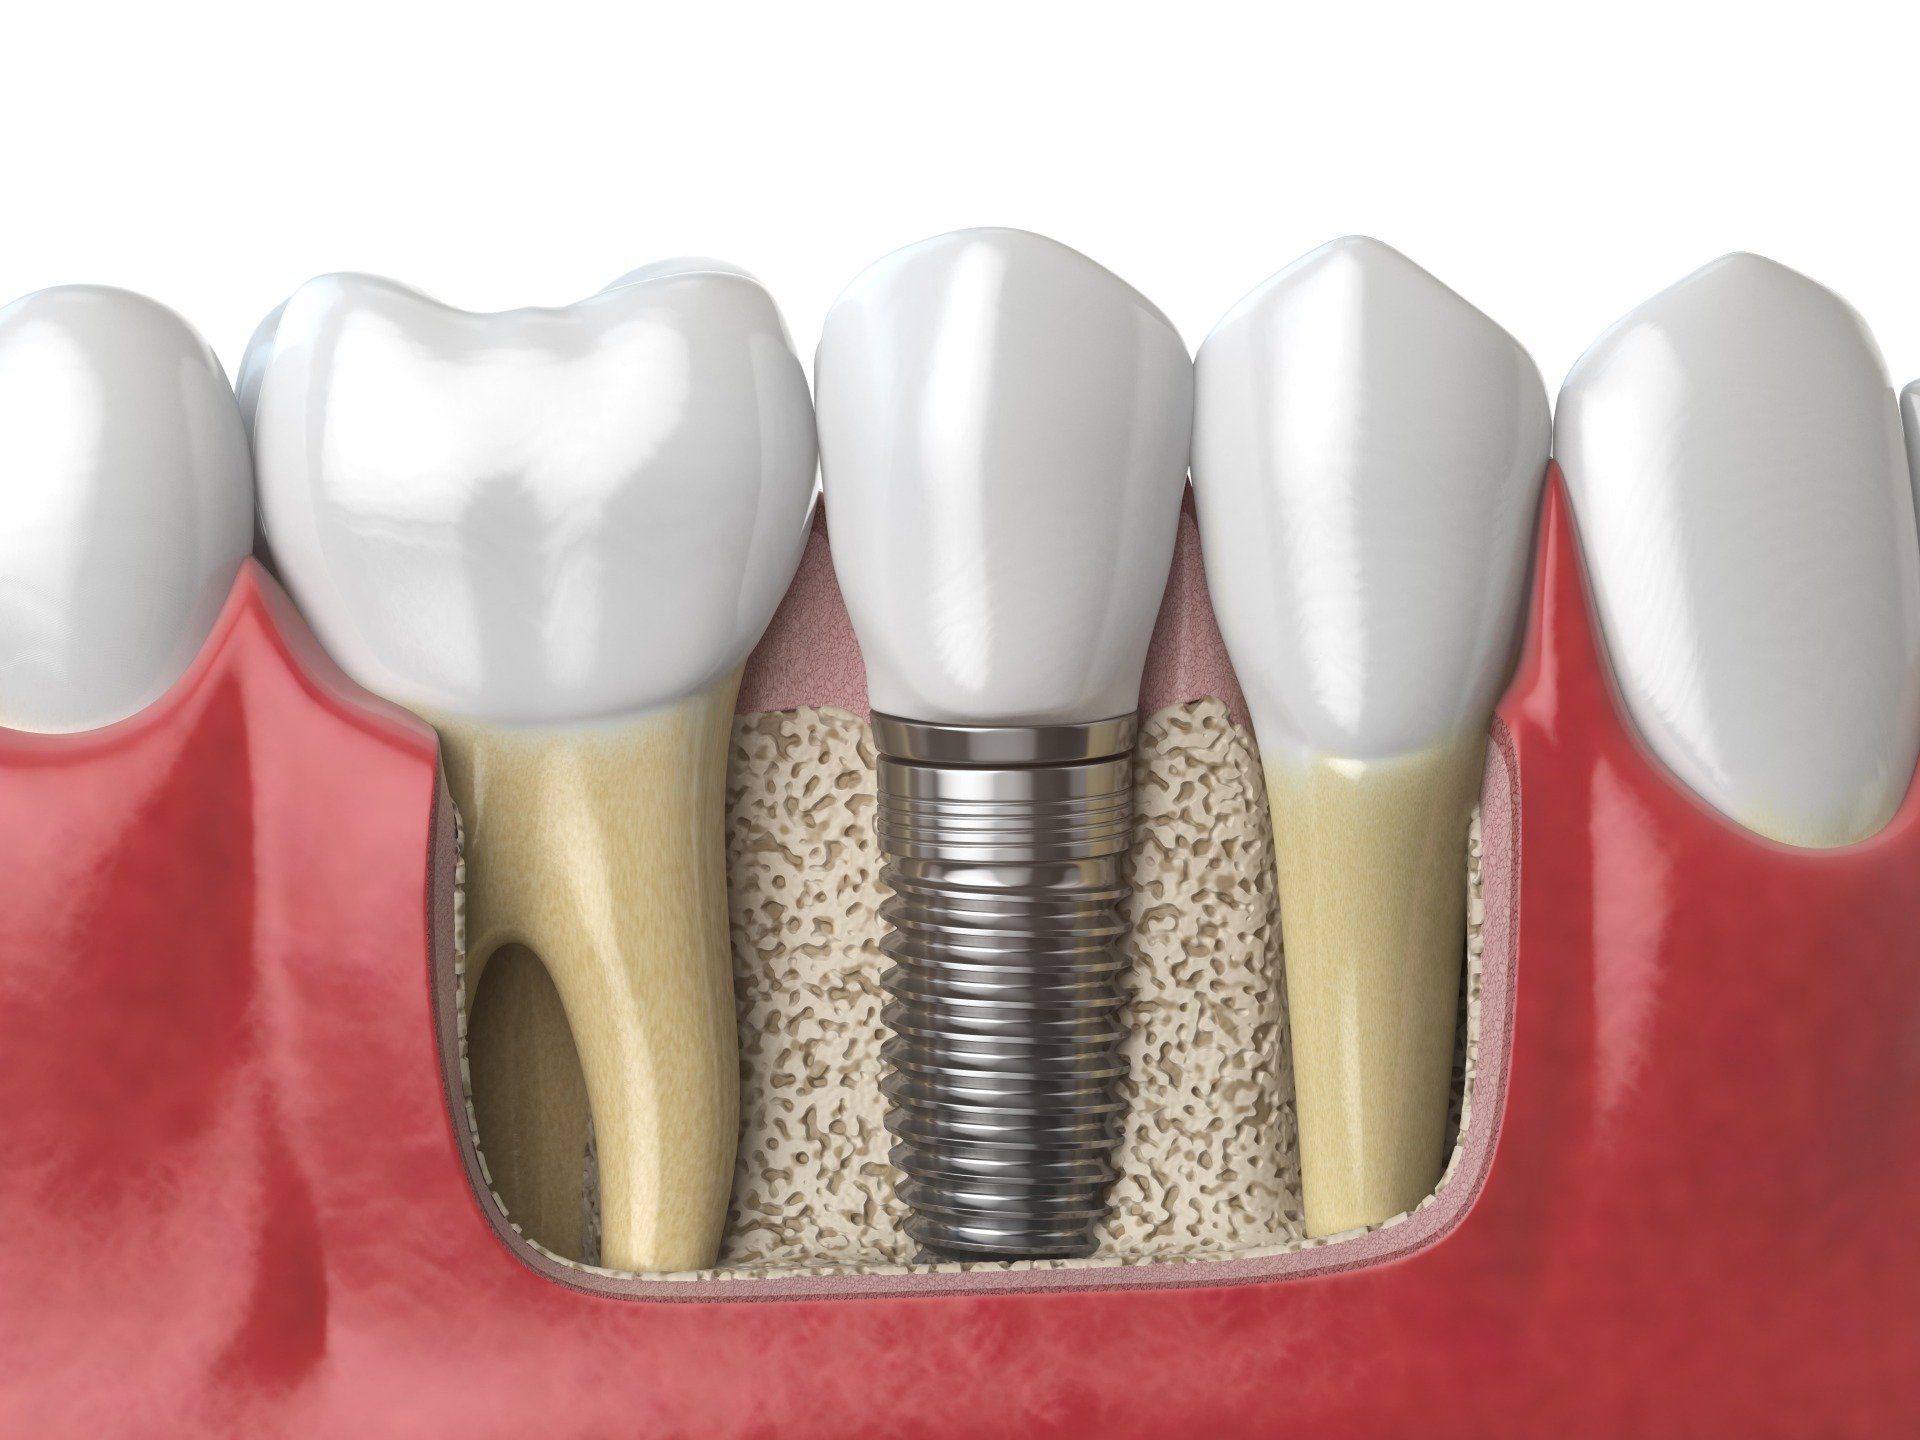 Top 10 Benefits of Dental Implants